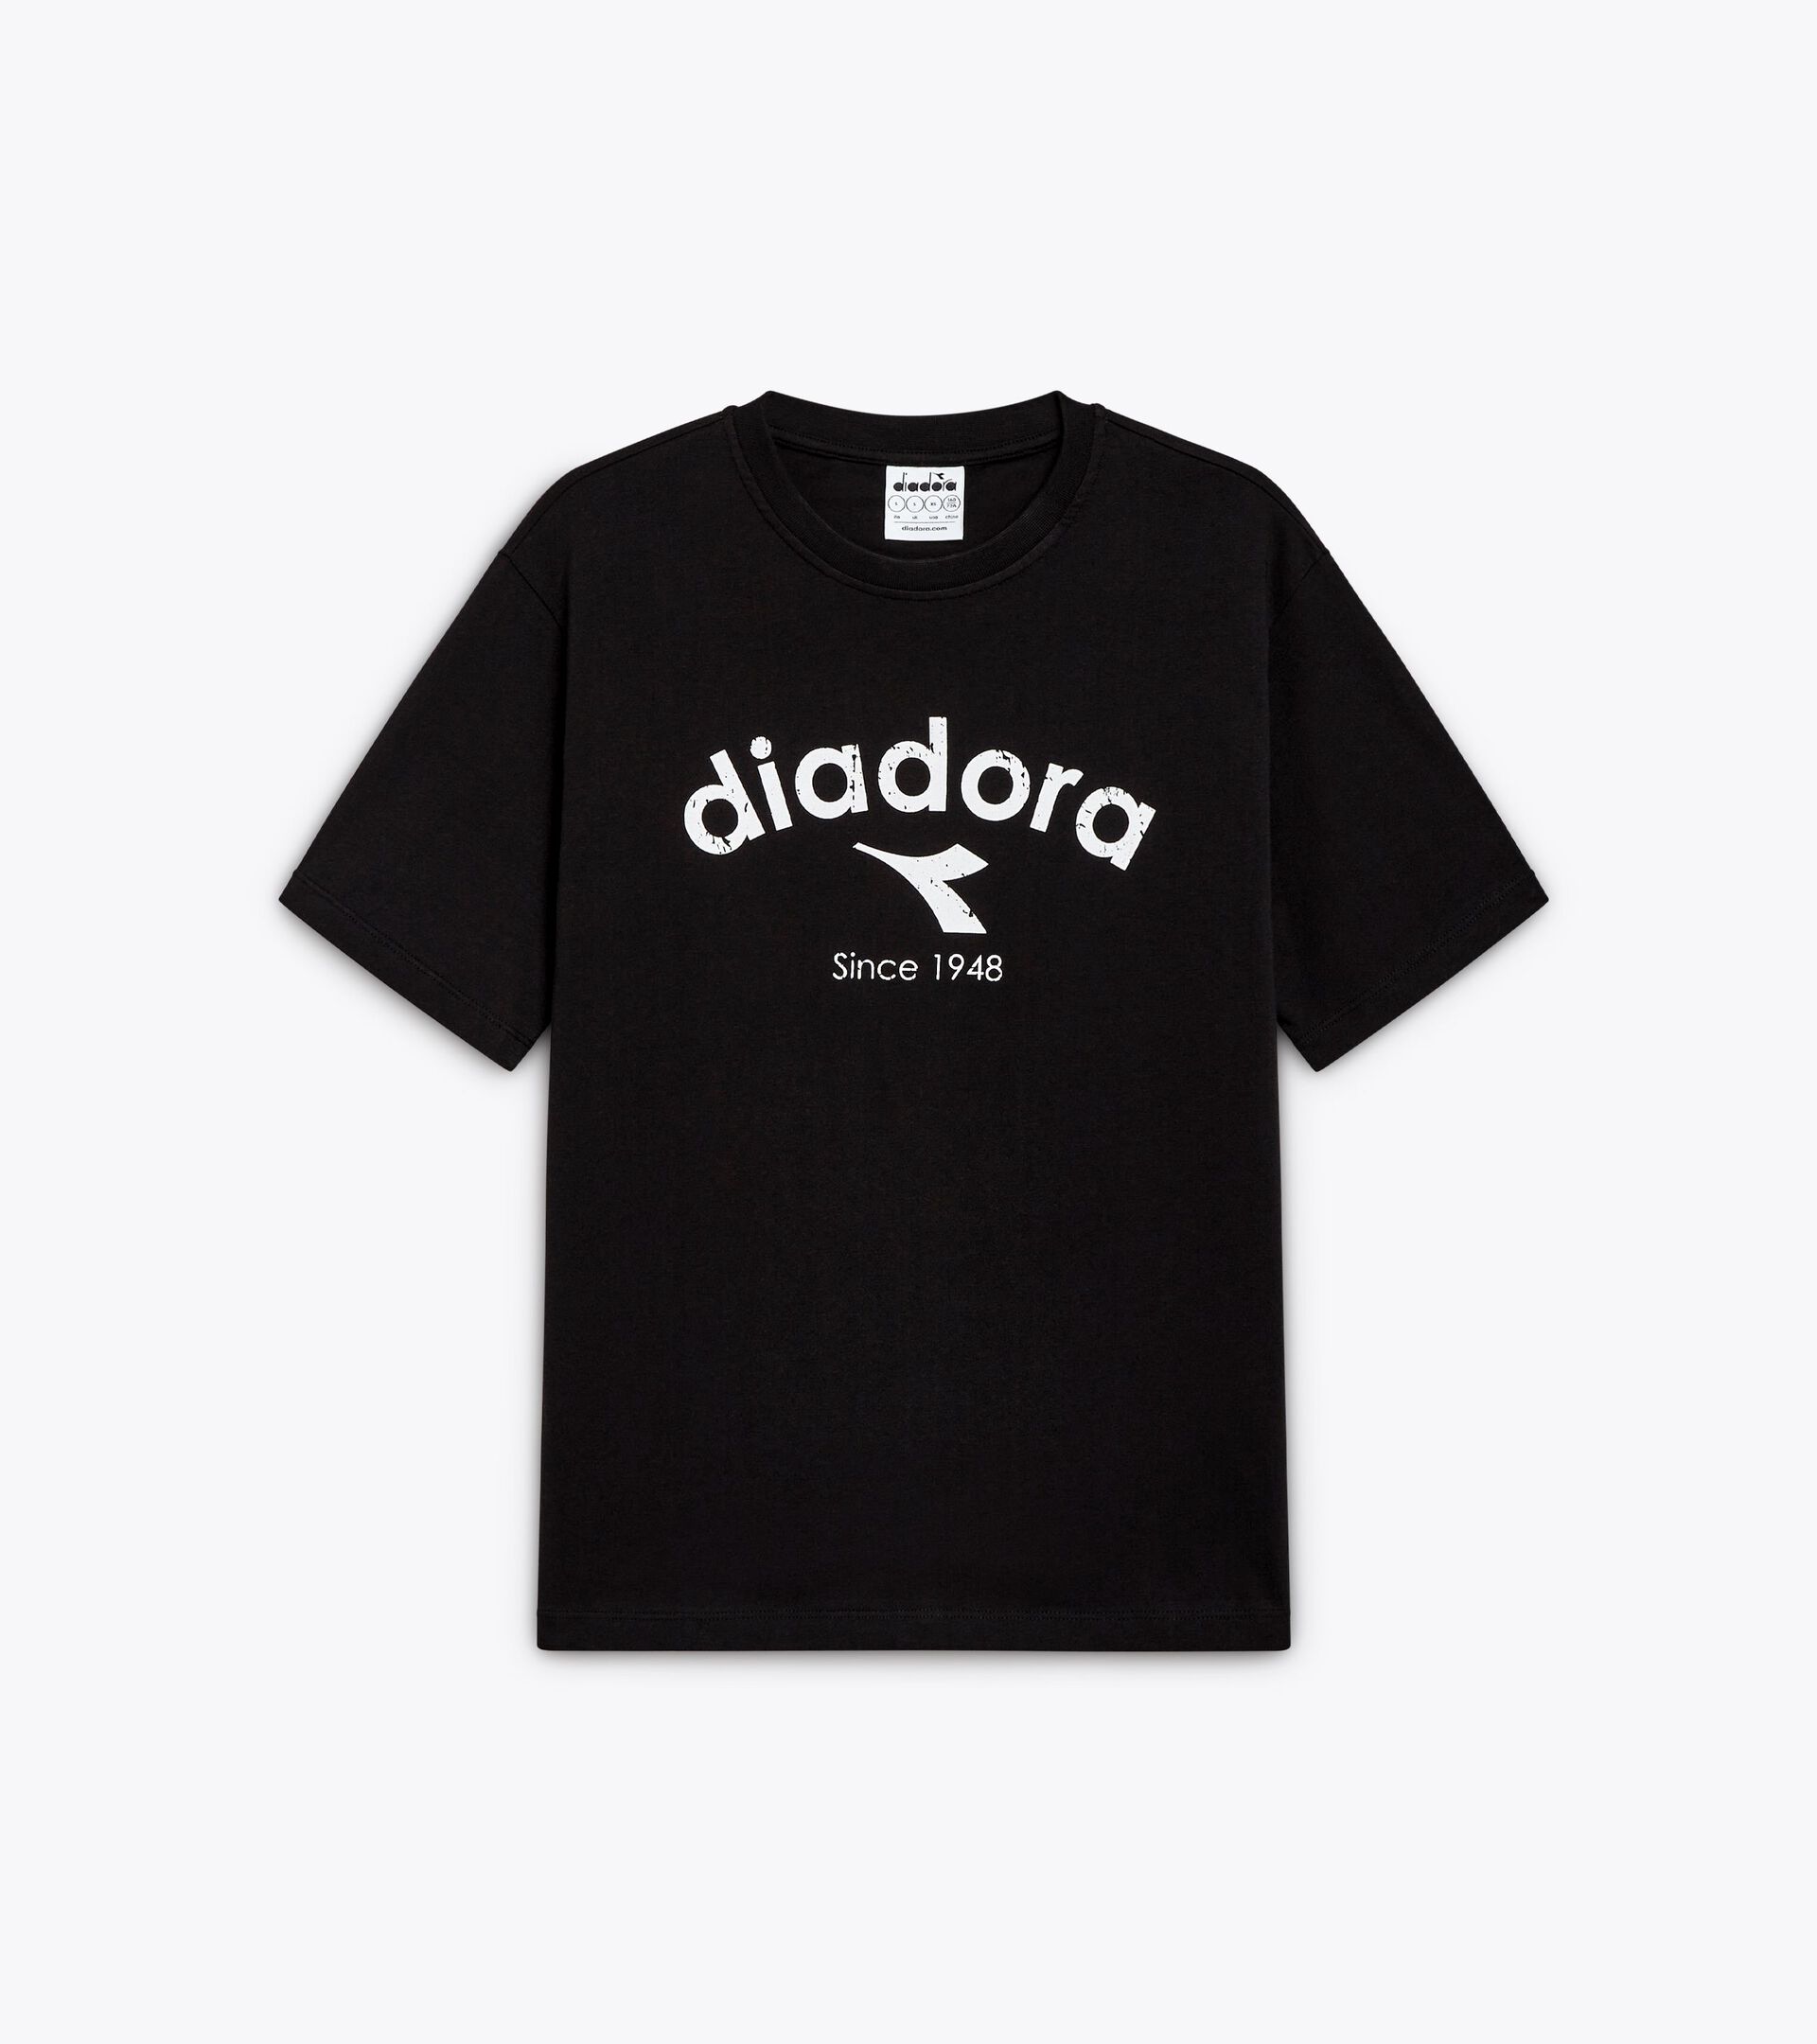 T-shirt - Gender Neutral T-SHIRT SS ATHL. LOGO NERO - Diadora